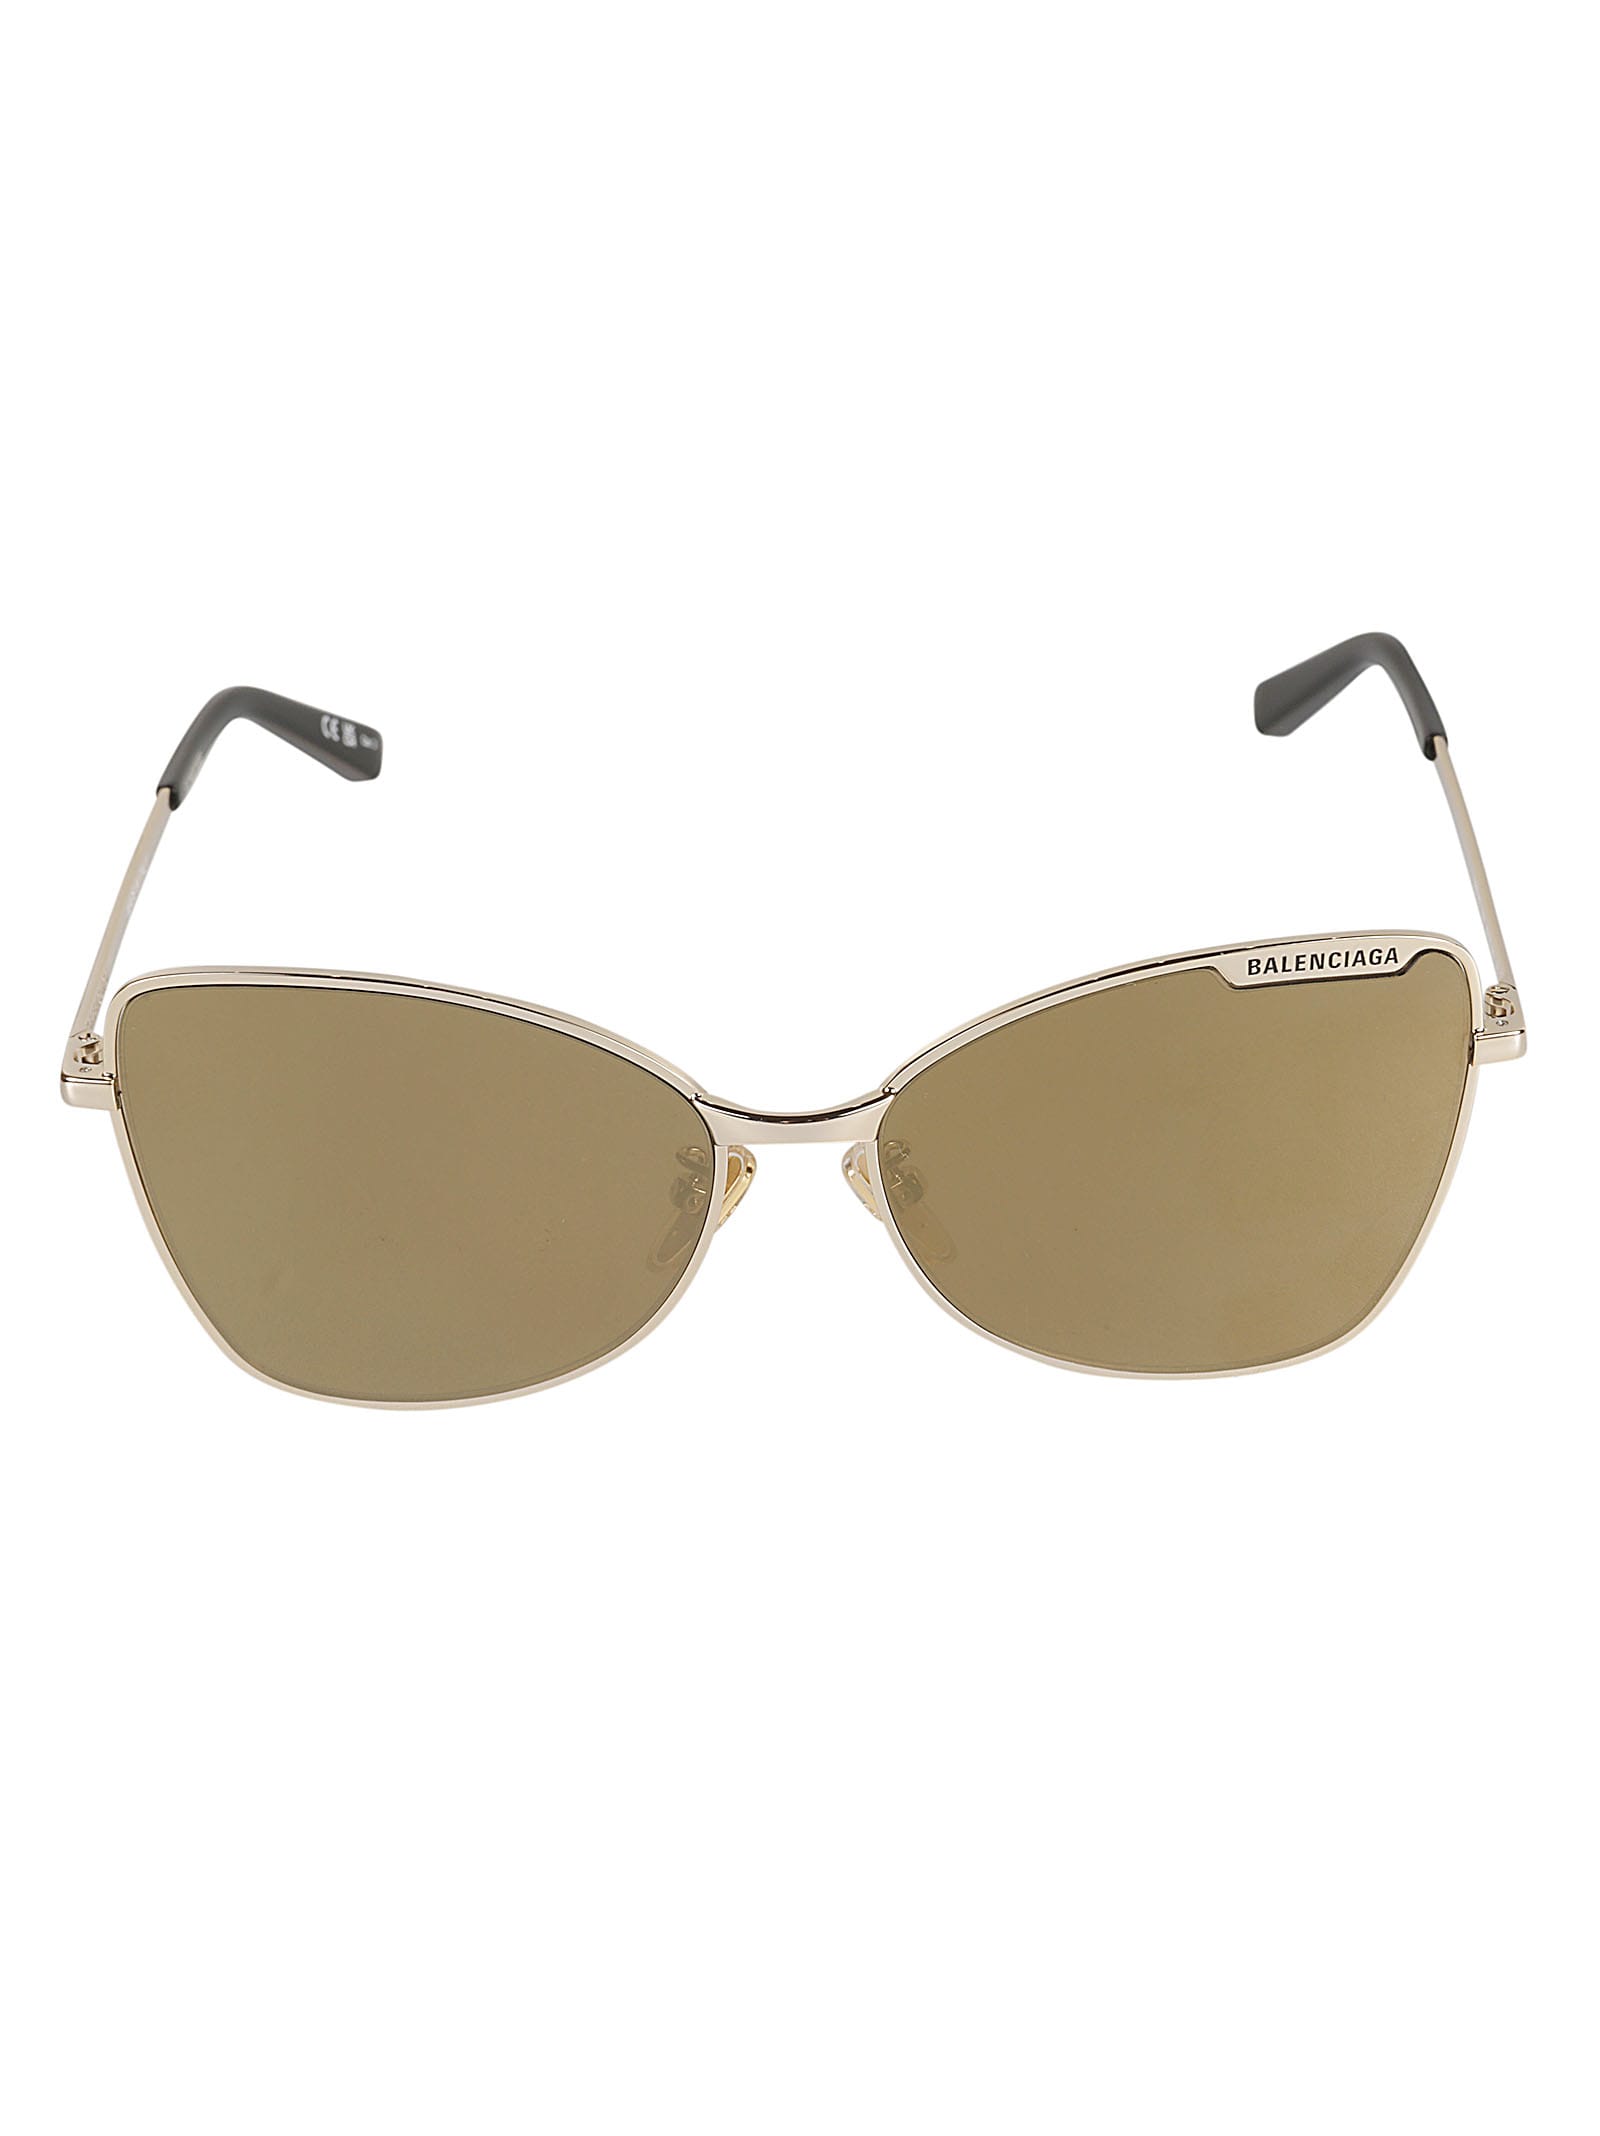 Balenciaga Butterfly Frame Sunglasses In Gold/bronze